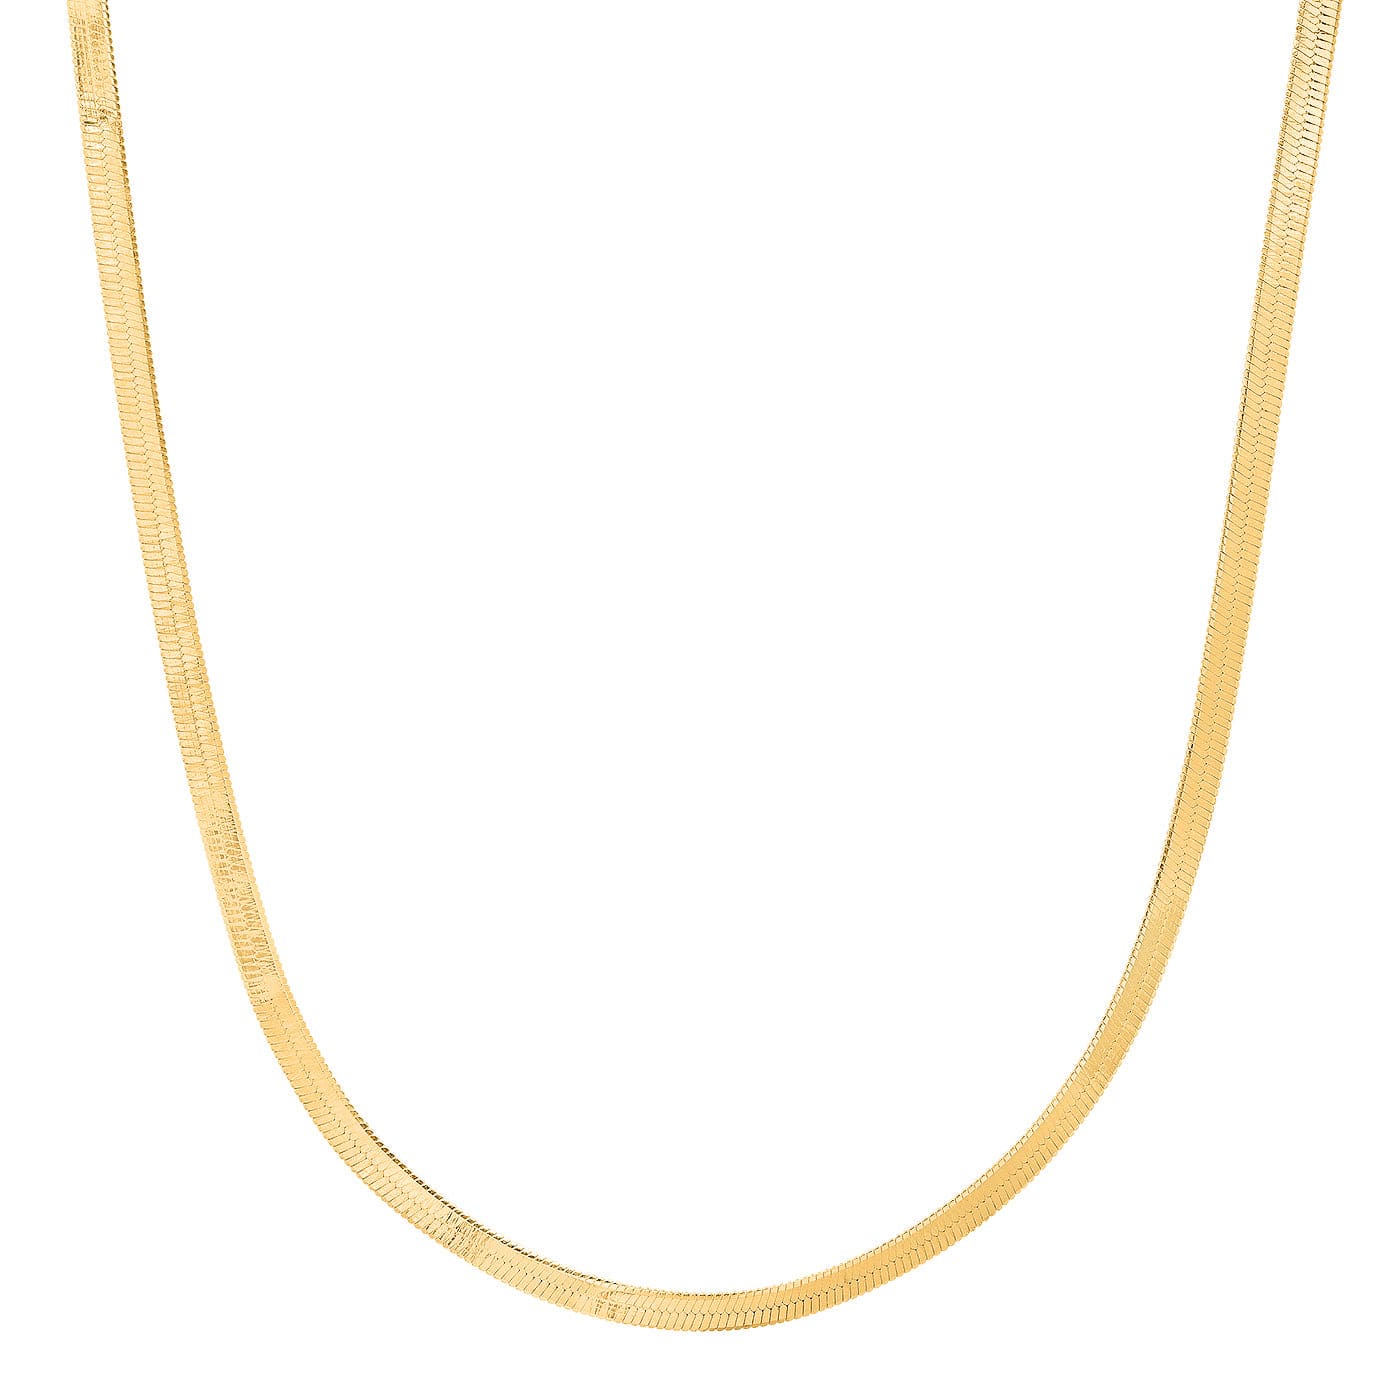 TAI JEWELRY Necklace Gold Herringbone Chain Necklace